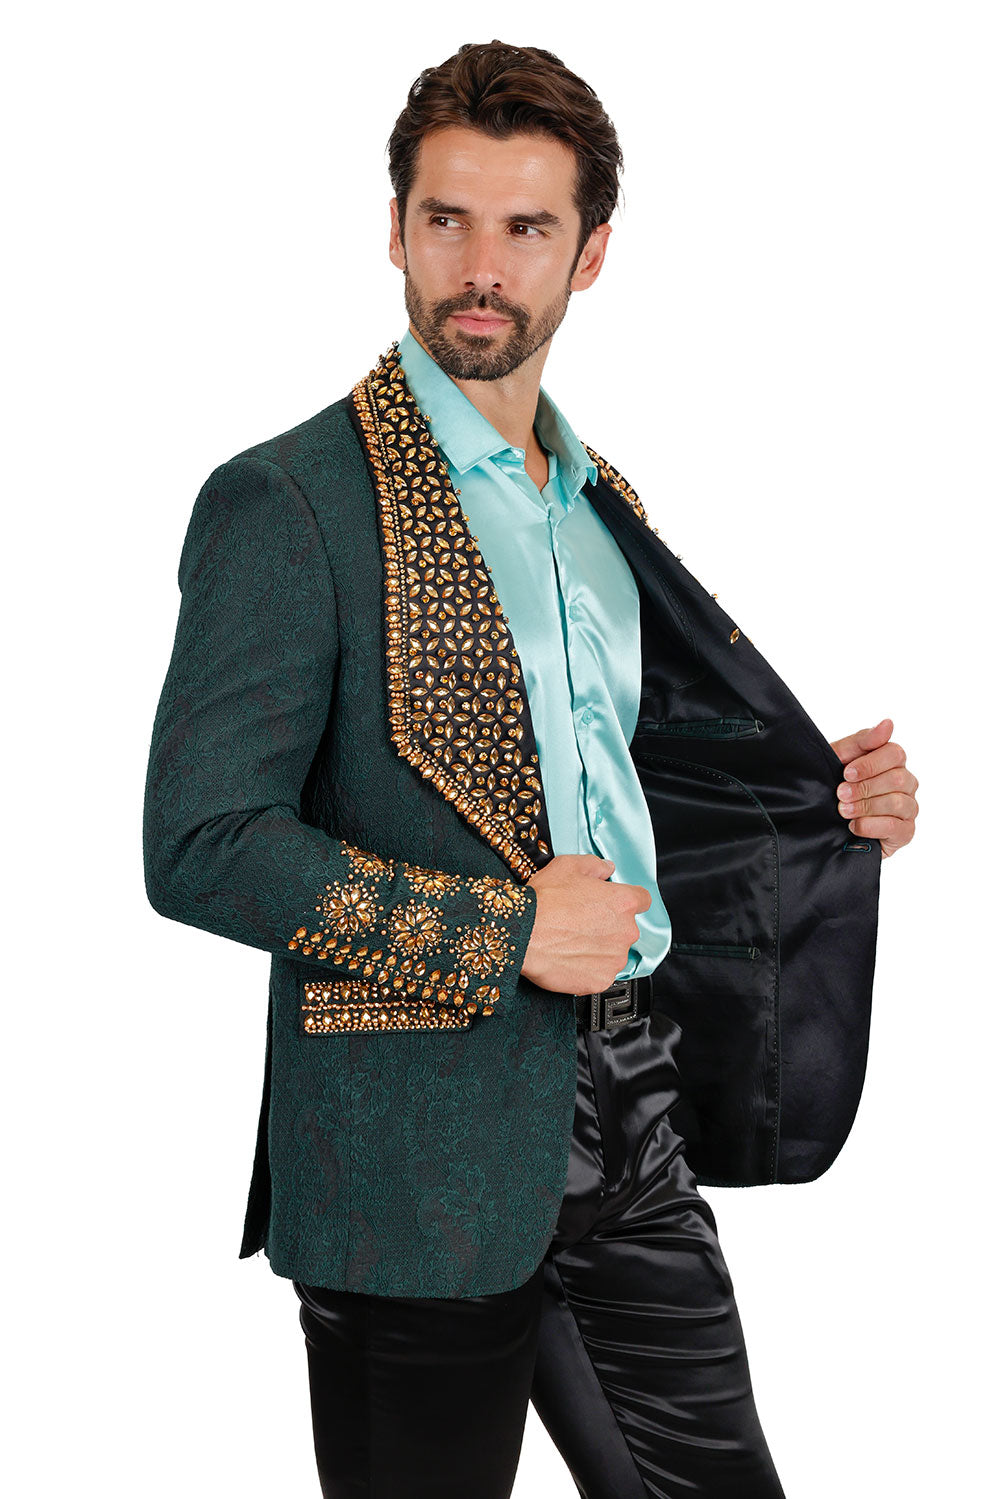 Barabas Elite Men's Rhinestone Luxury Shawl Collar Blazer 3EBL14 Green Gold